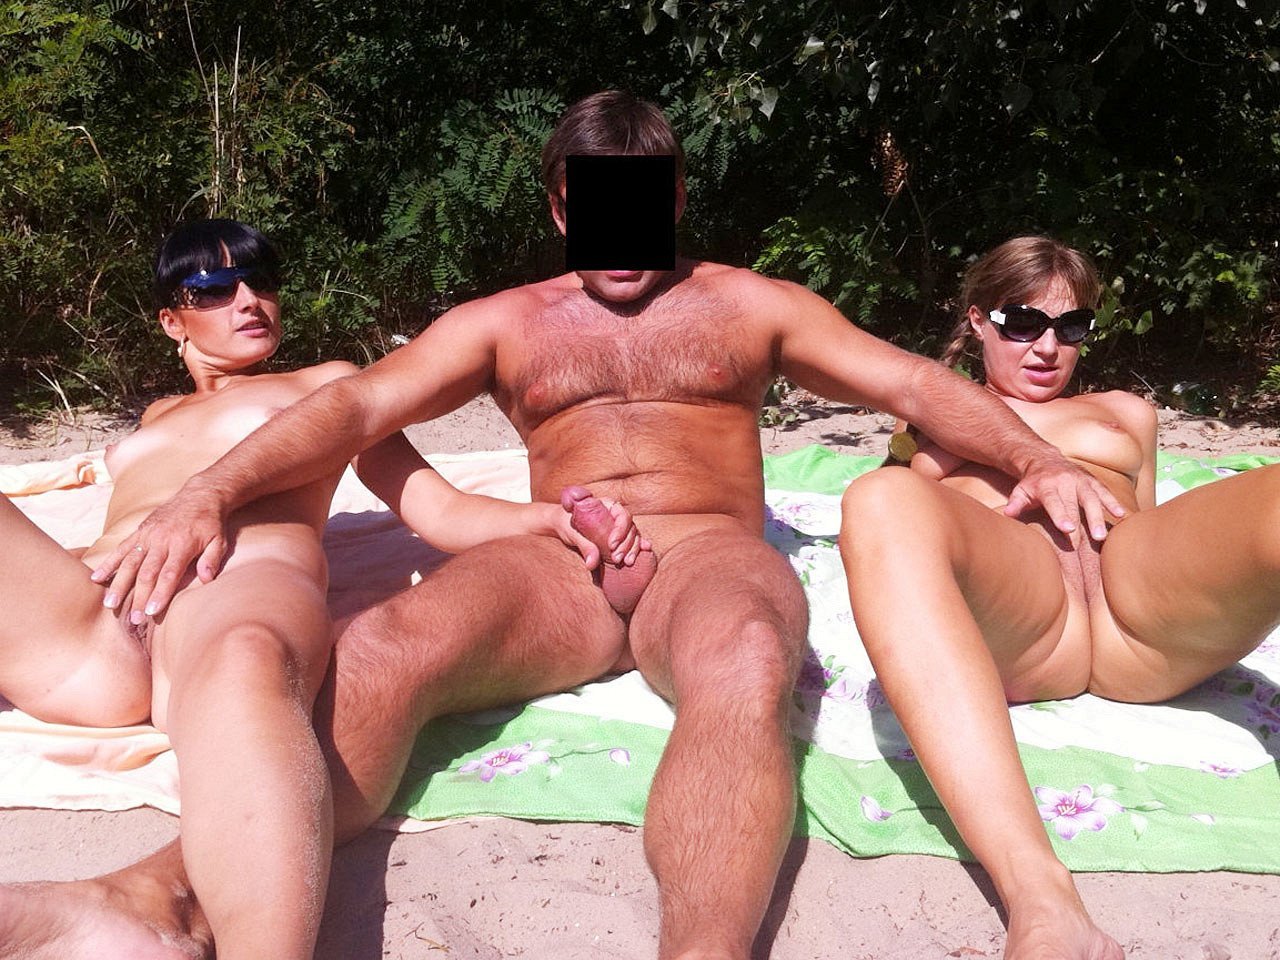 Dutch nudist couples